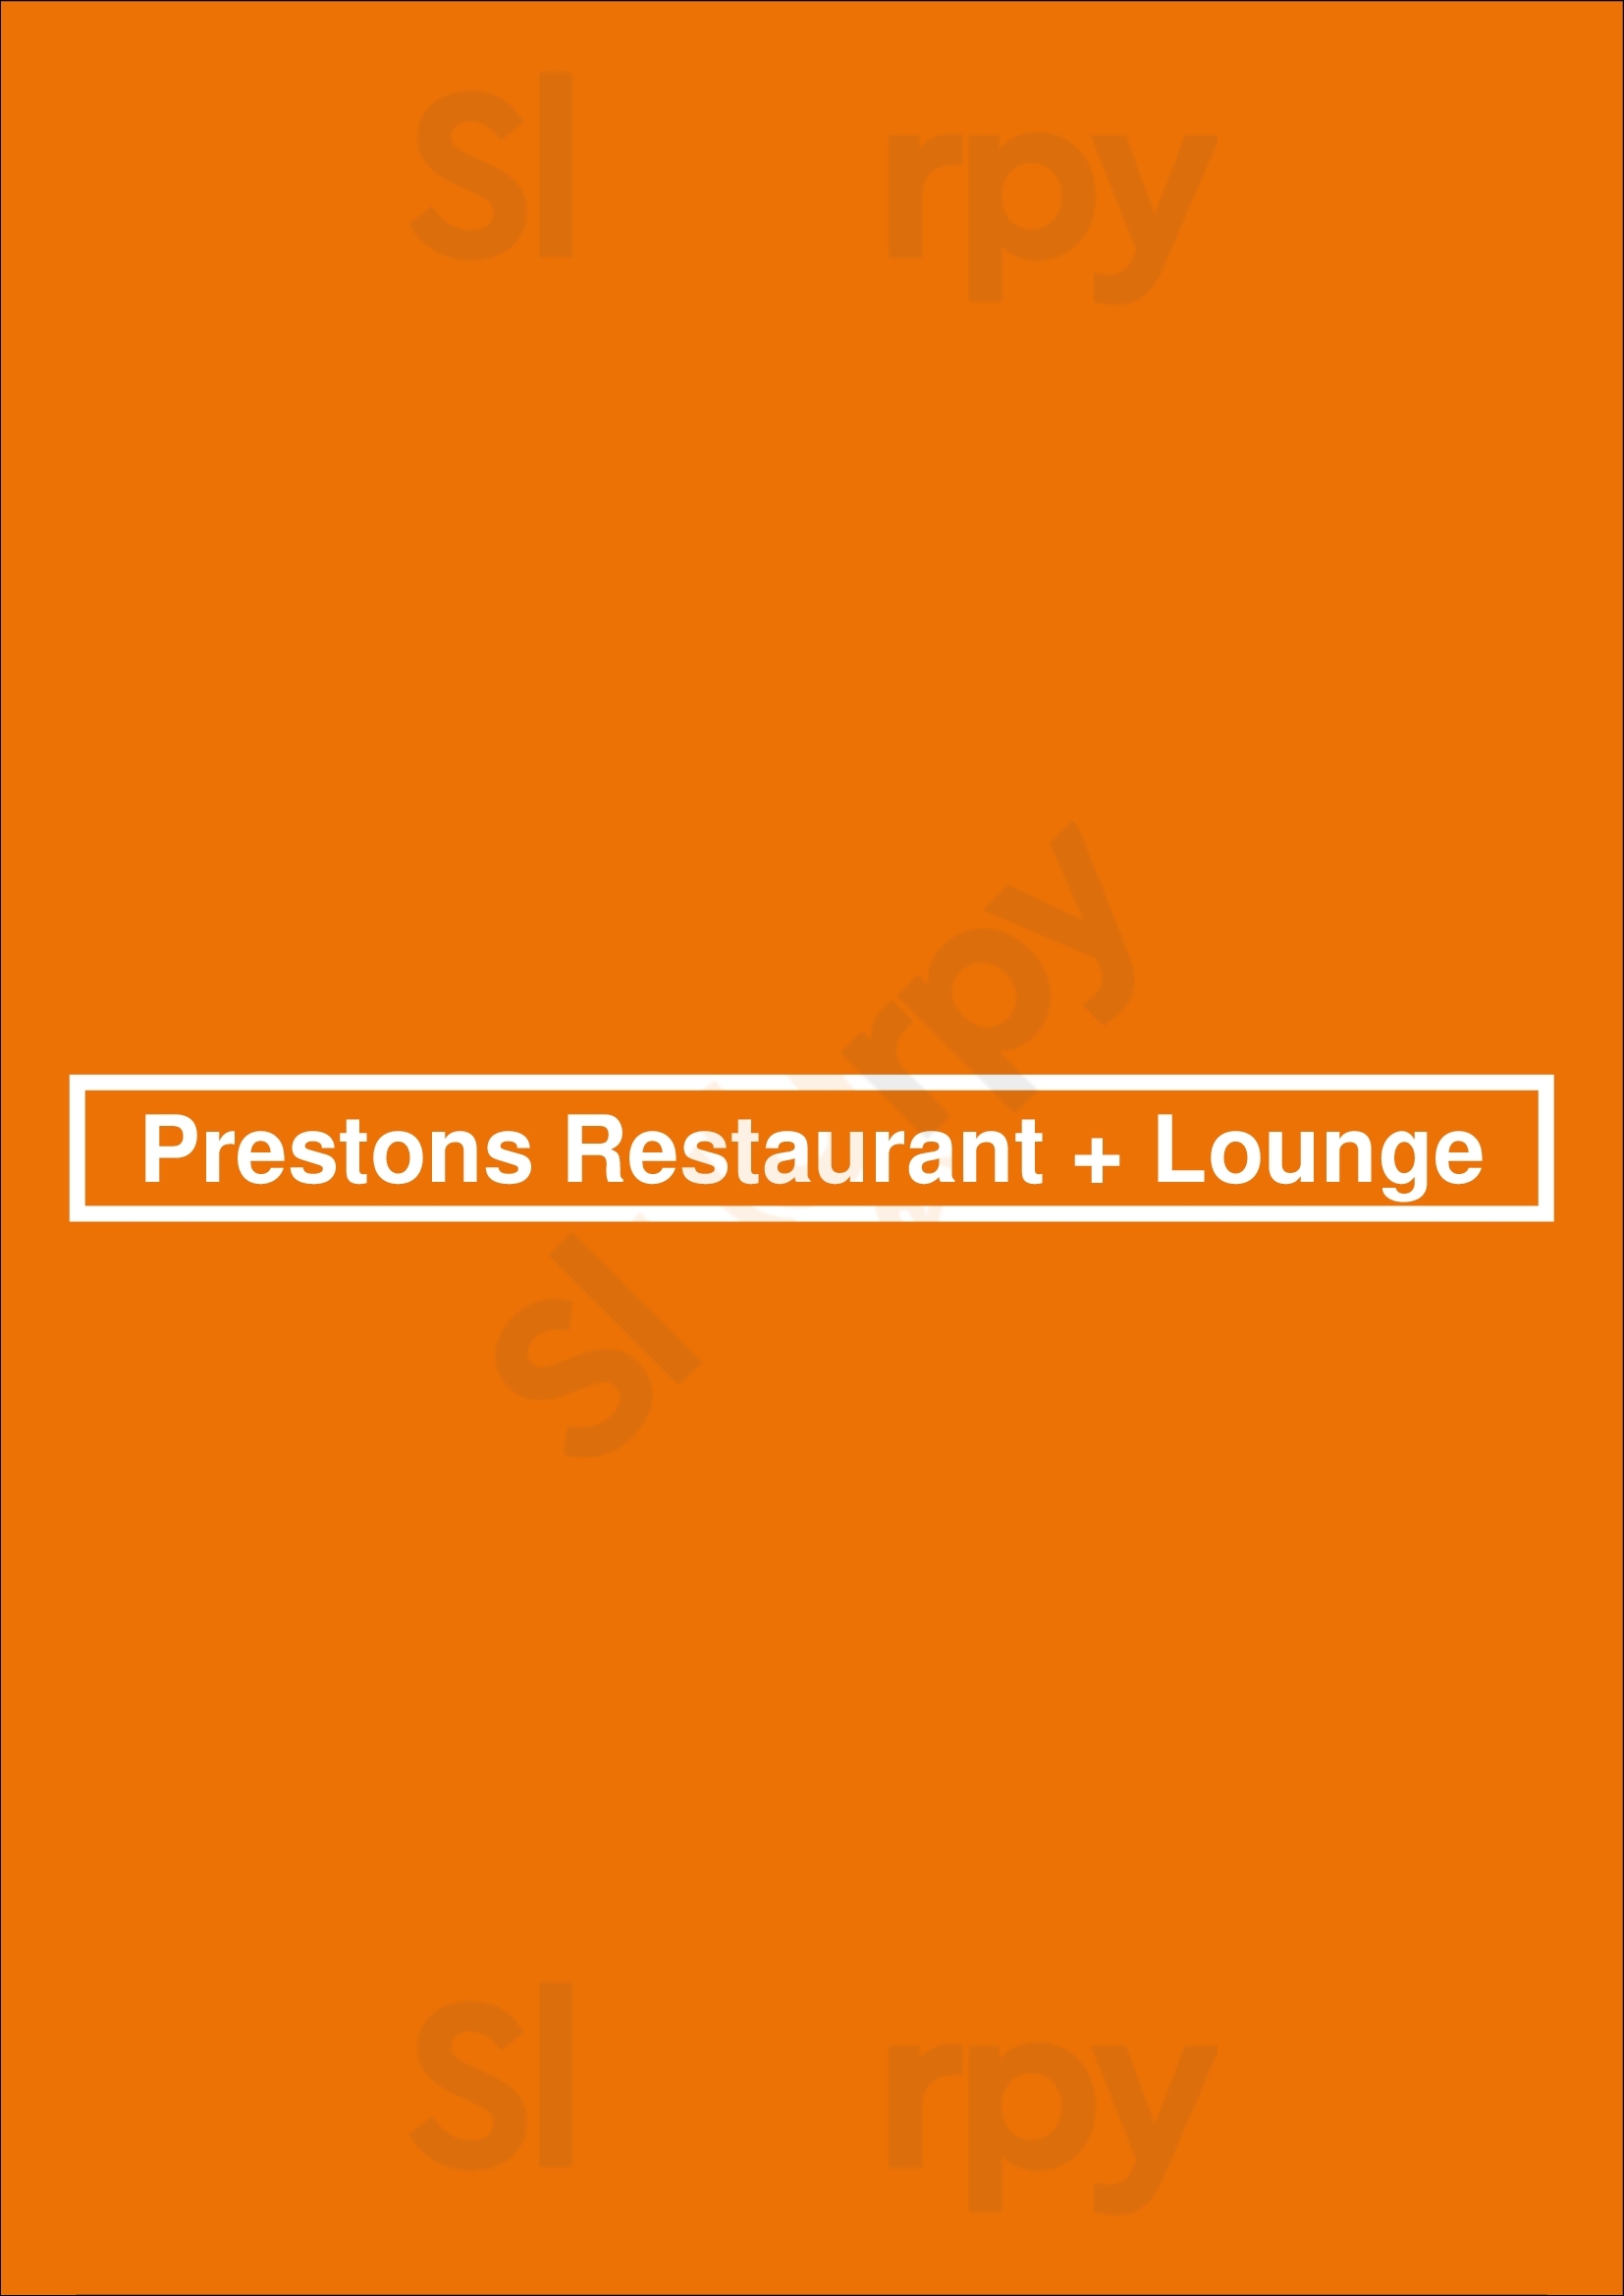 Prestons Restaurant + Lounge Vancouver Menu - 1